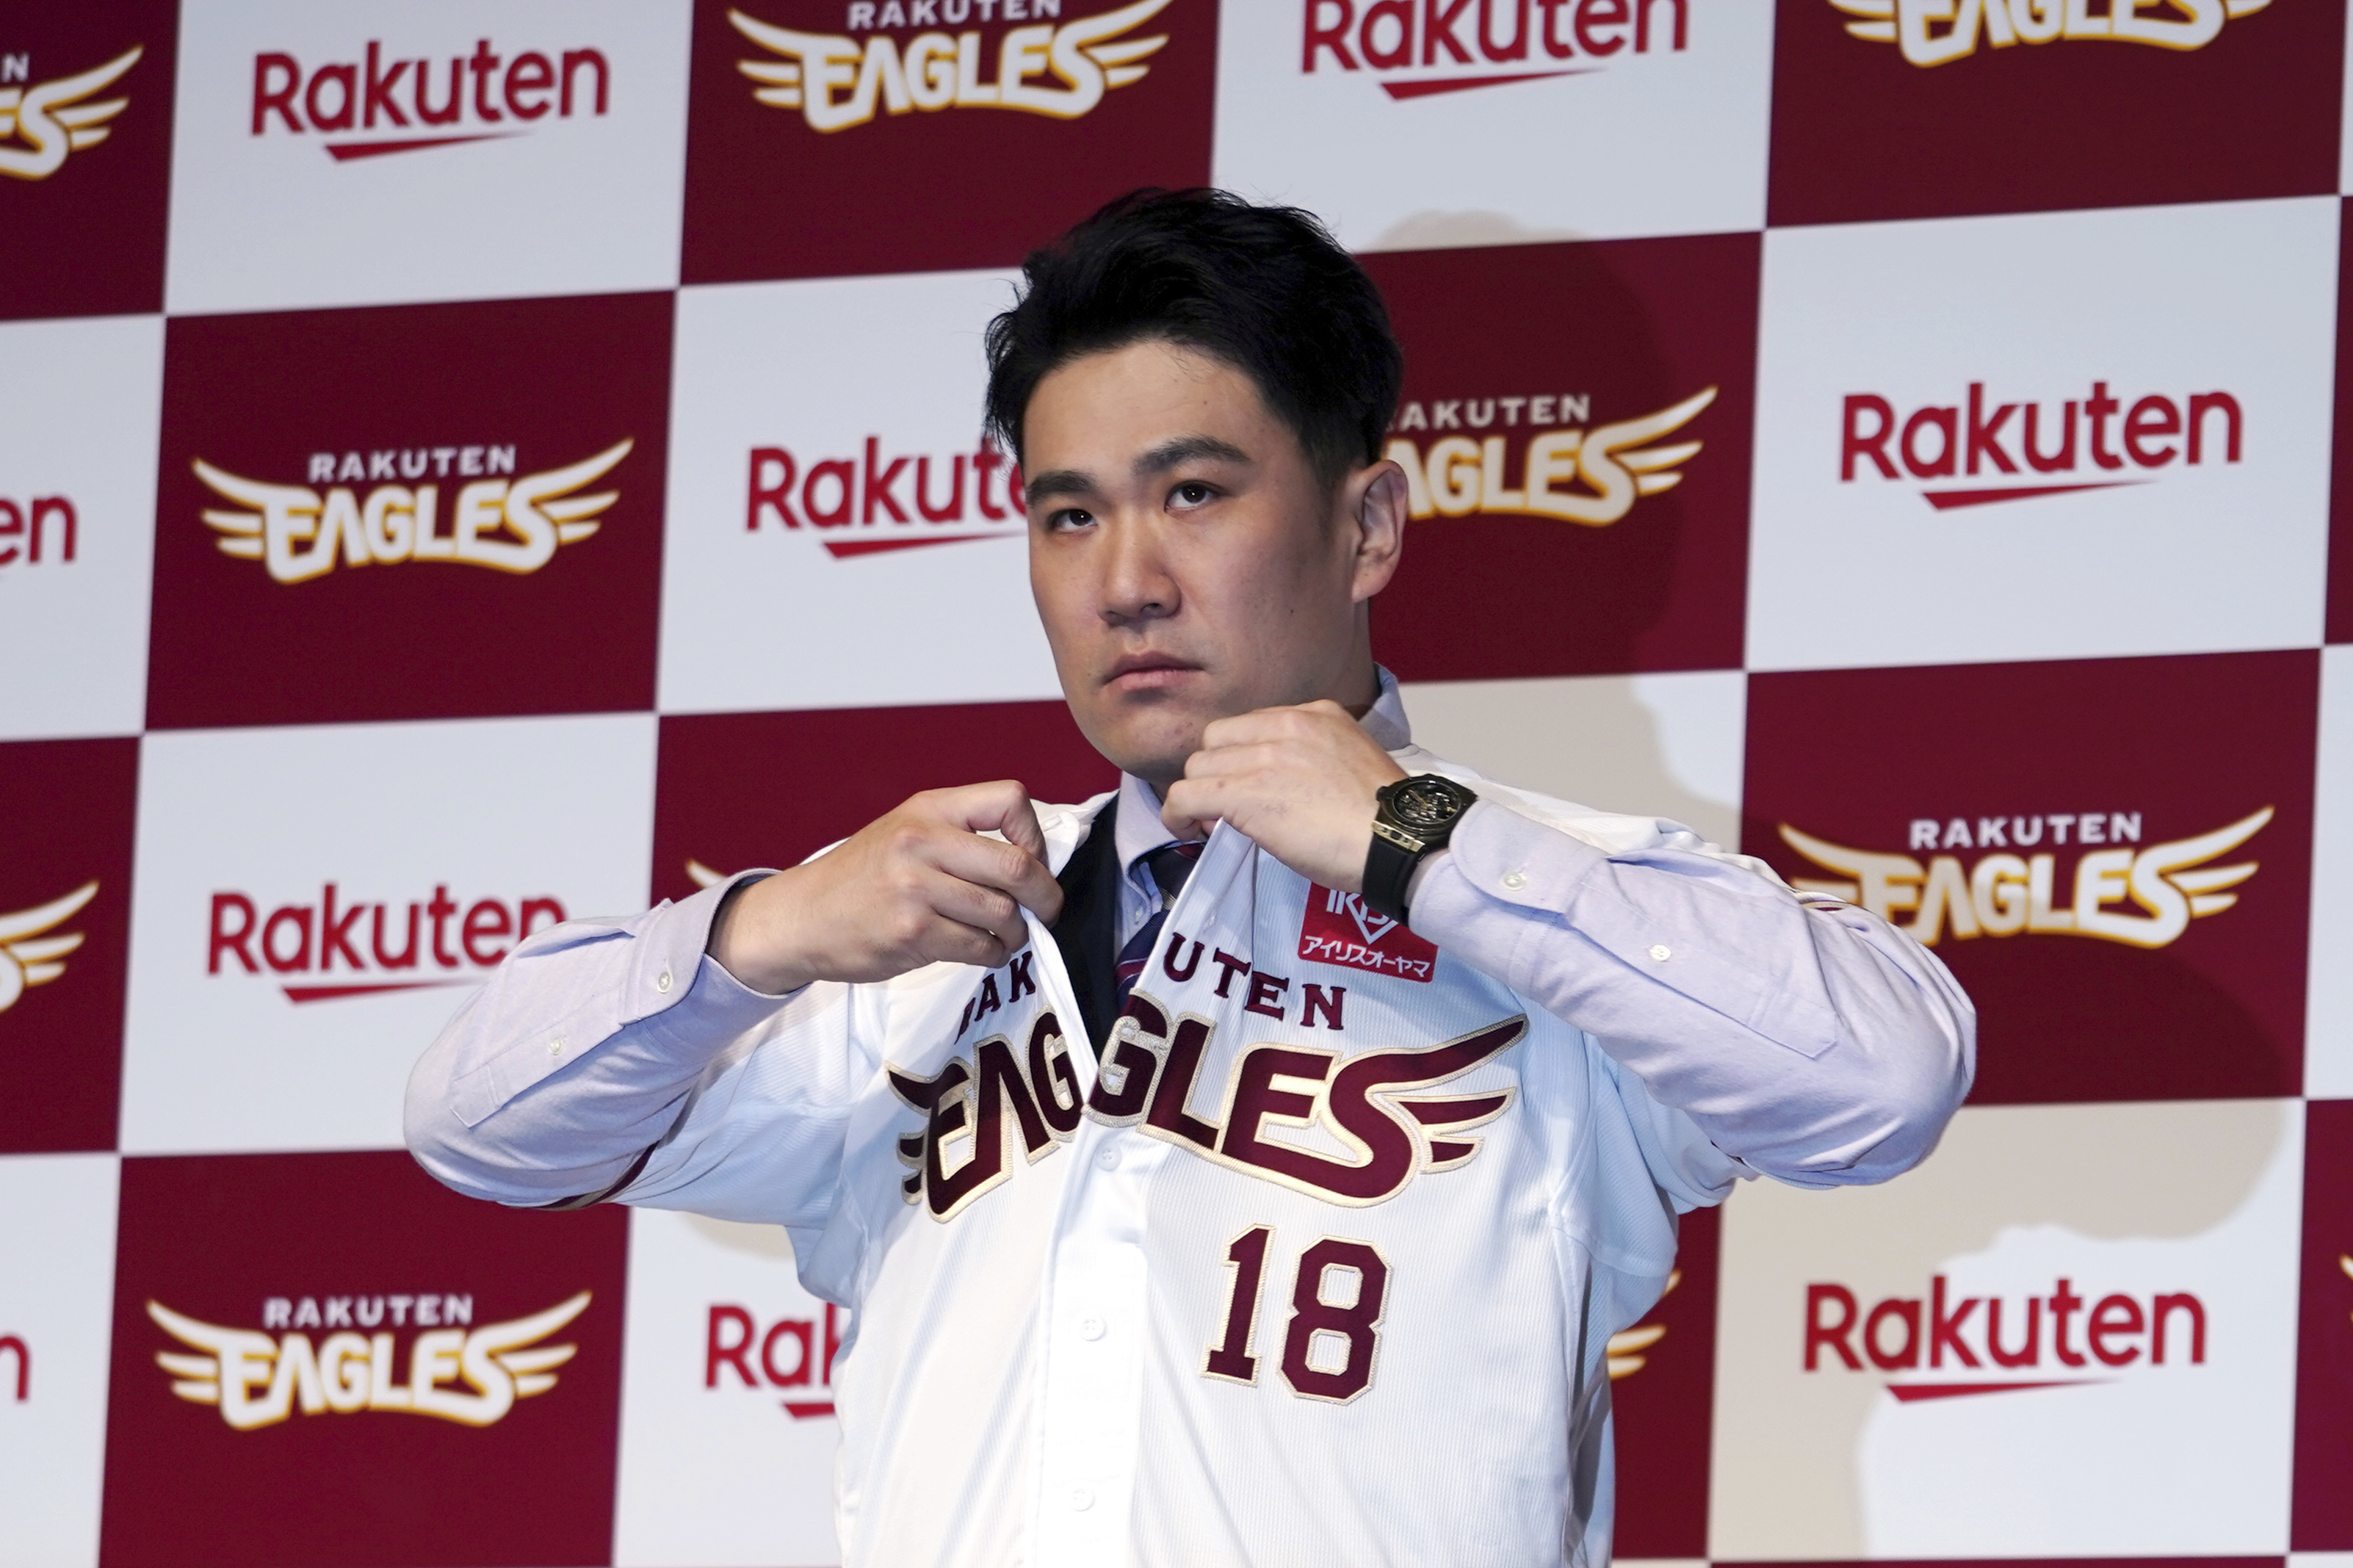 Rakuten Golden Eagles will allow Masahiro Tanaka to make the jump